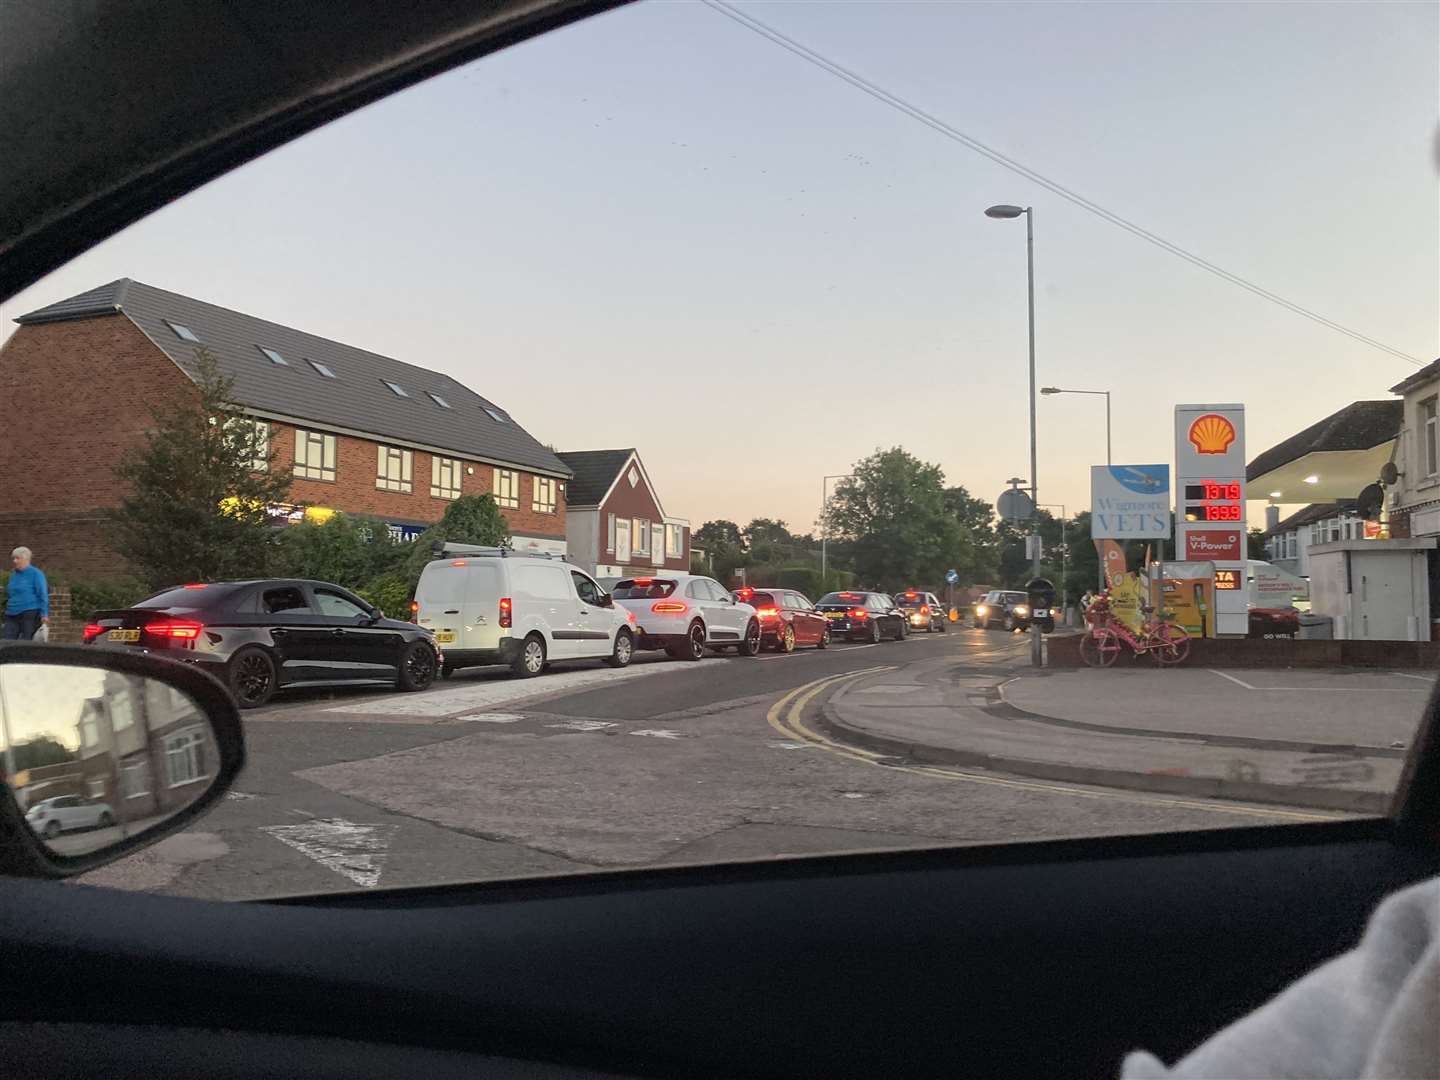 Queuing traffic waiting to access a petrol station in Wigmore, near Rainham (51577871)